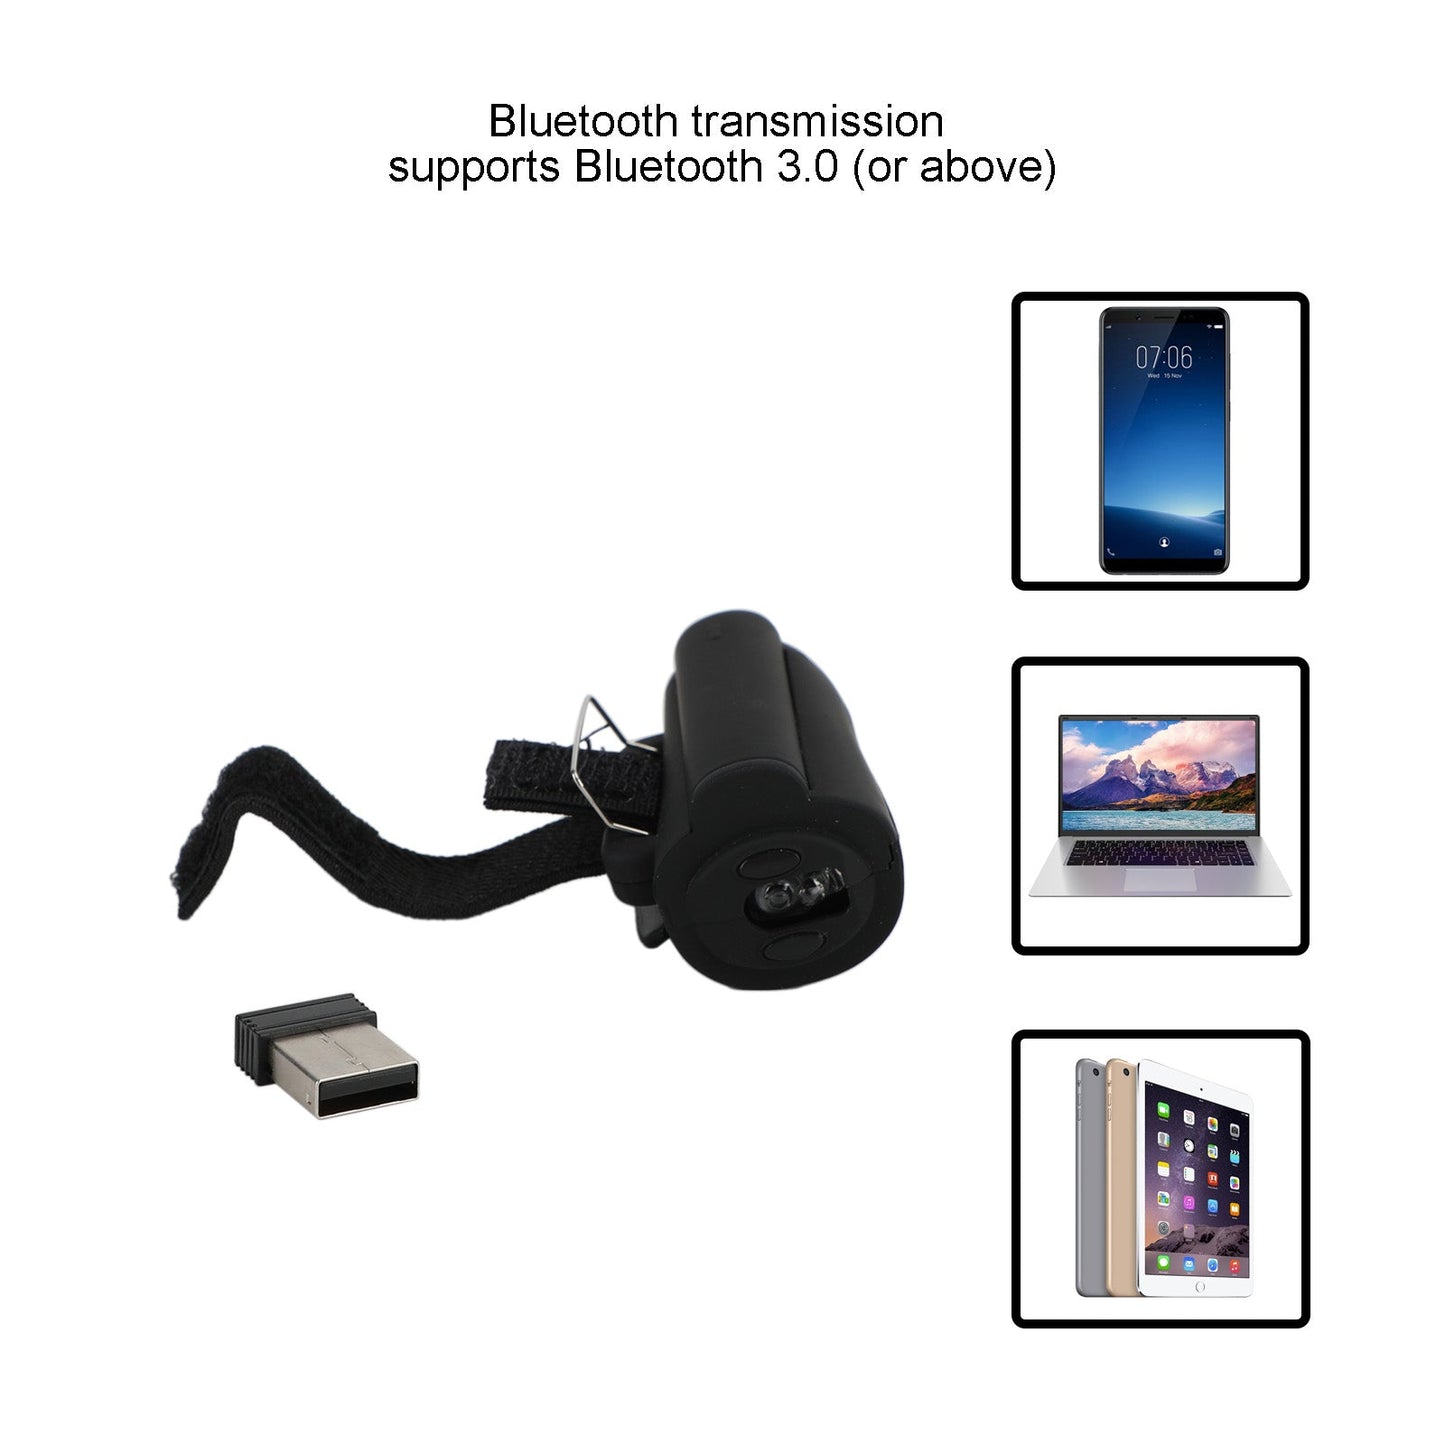 2.4G USB Portable Handheld Optical Trackball Pen Wireless Mouse Adjustable DPI